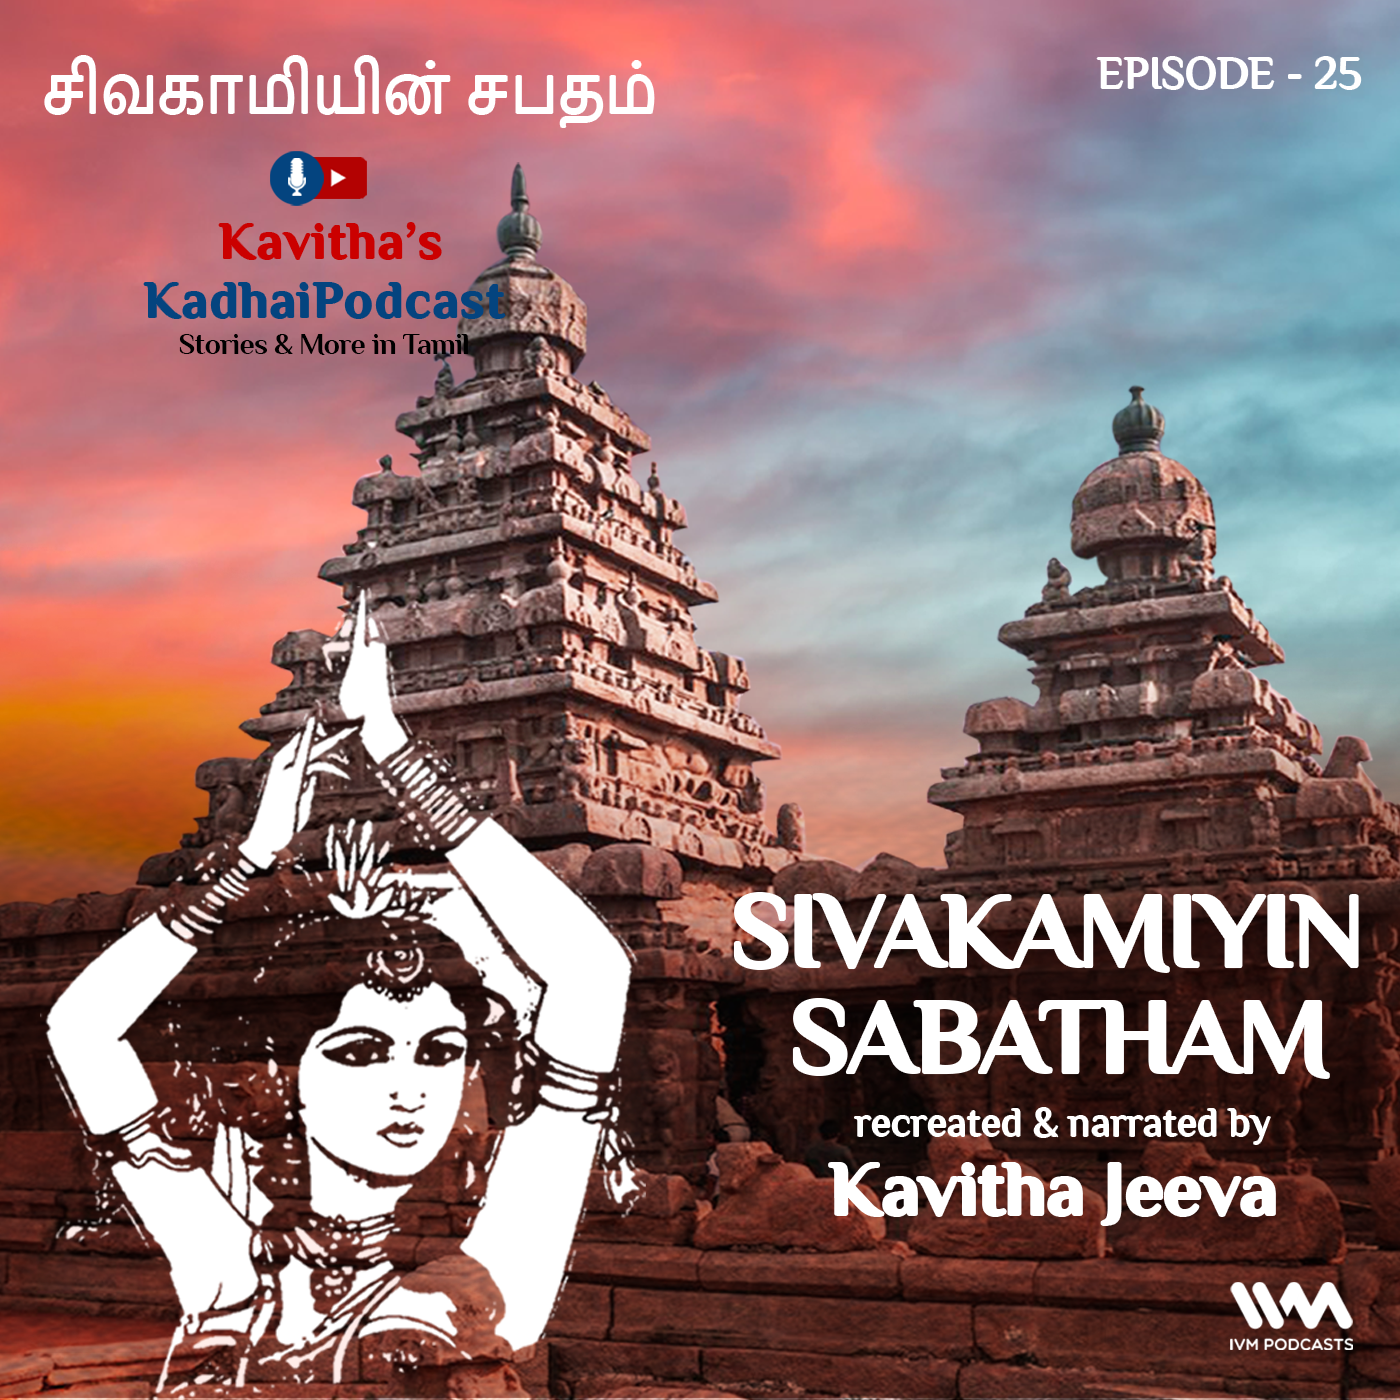 KadhaiPodcast's Sivakamiyin Sabatham - Episode # 25